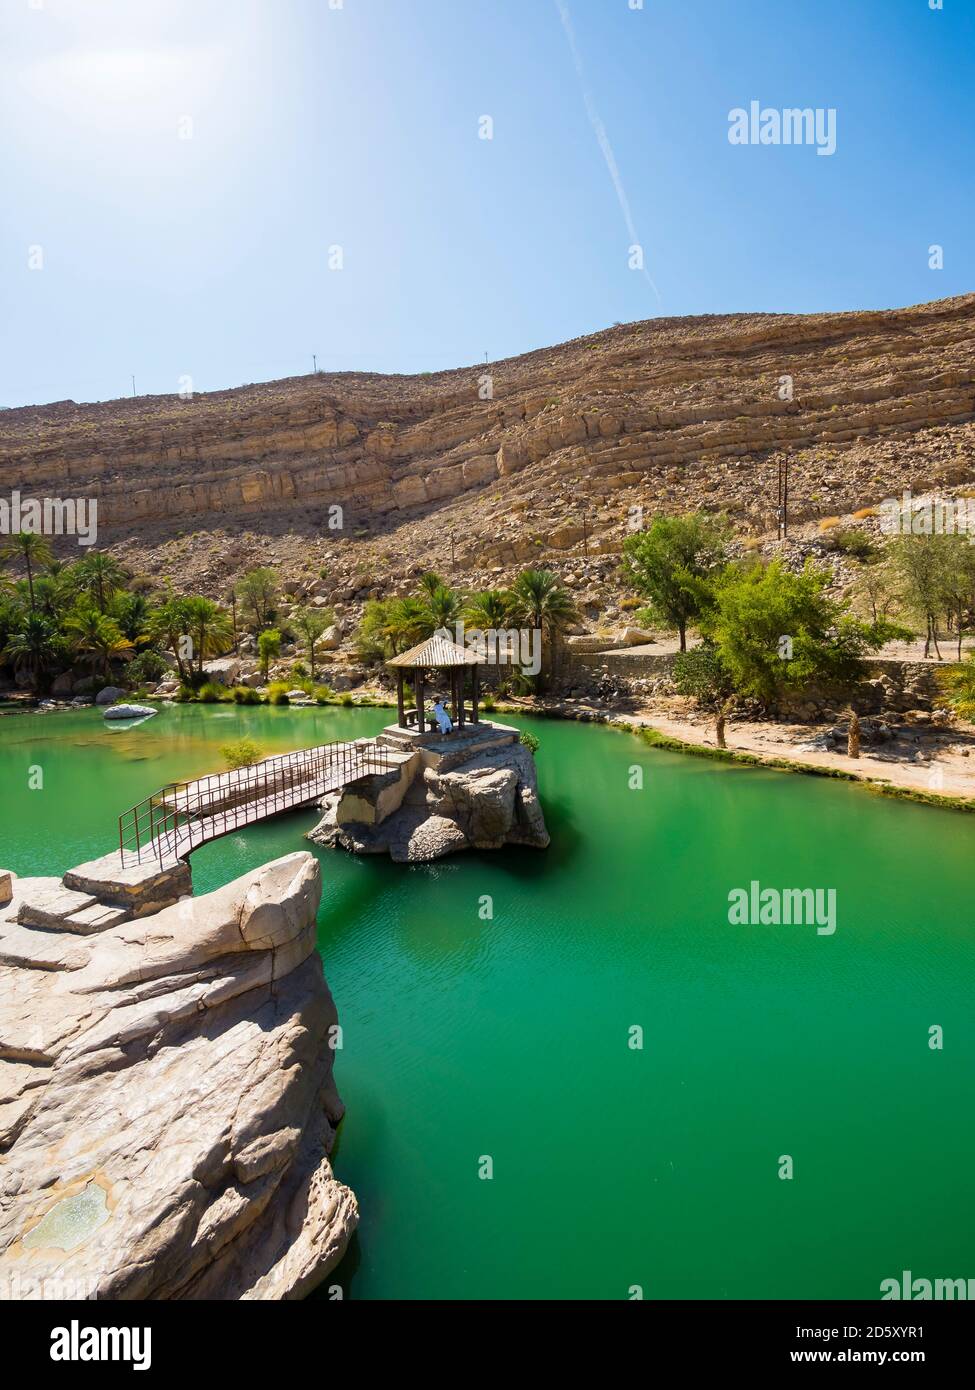 Oman, Sharqiyah, pavilion on rock at Wadi Bani Khalid Stock Photo